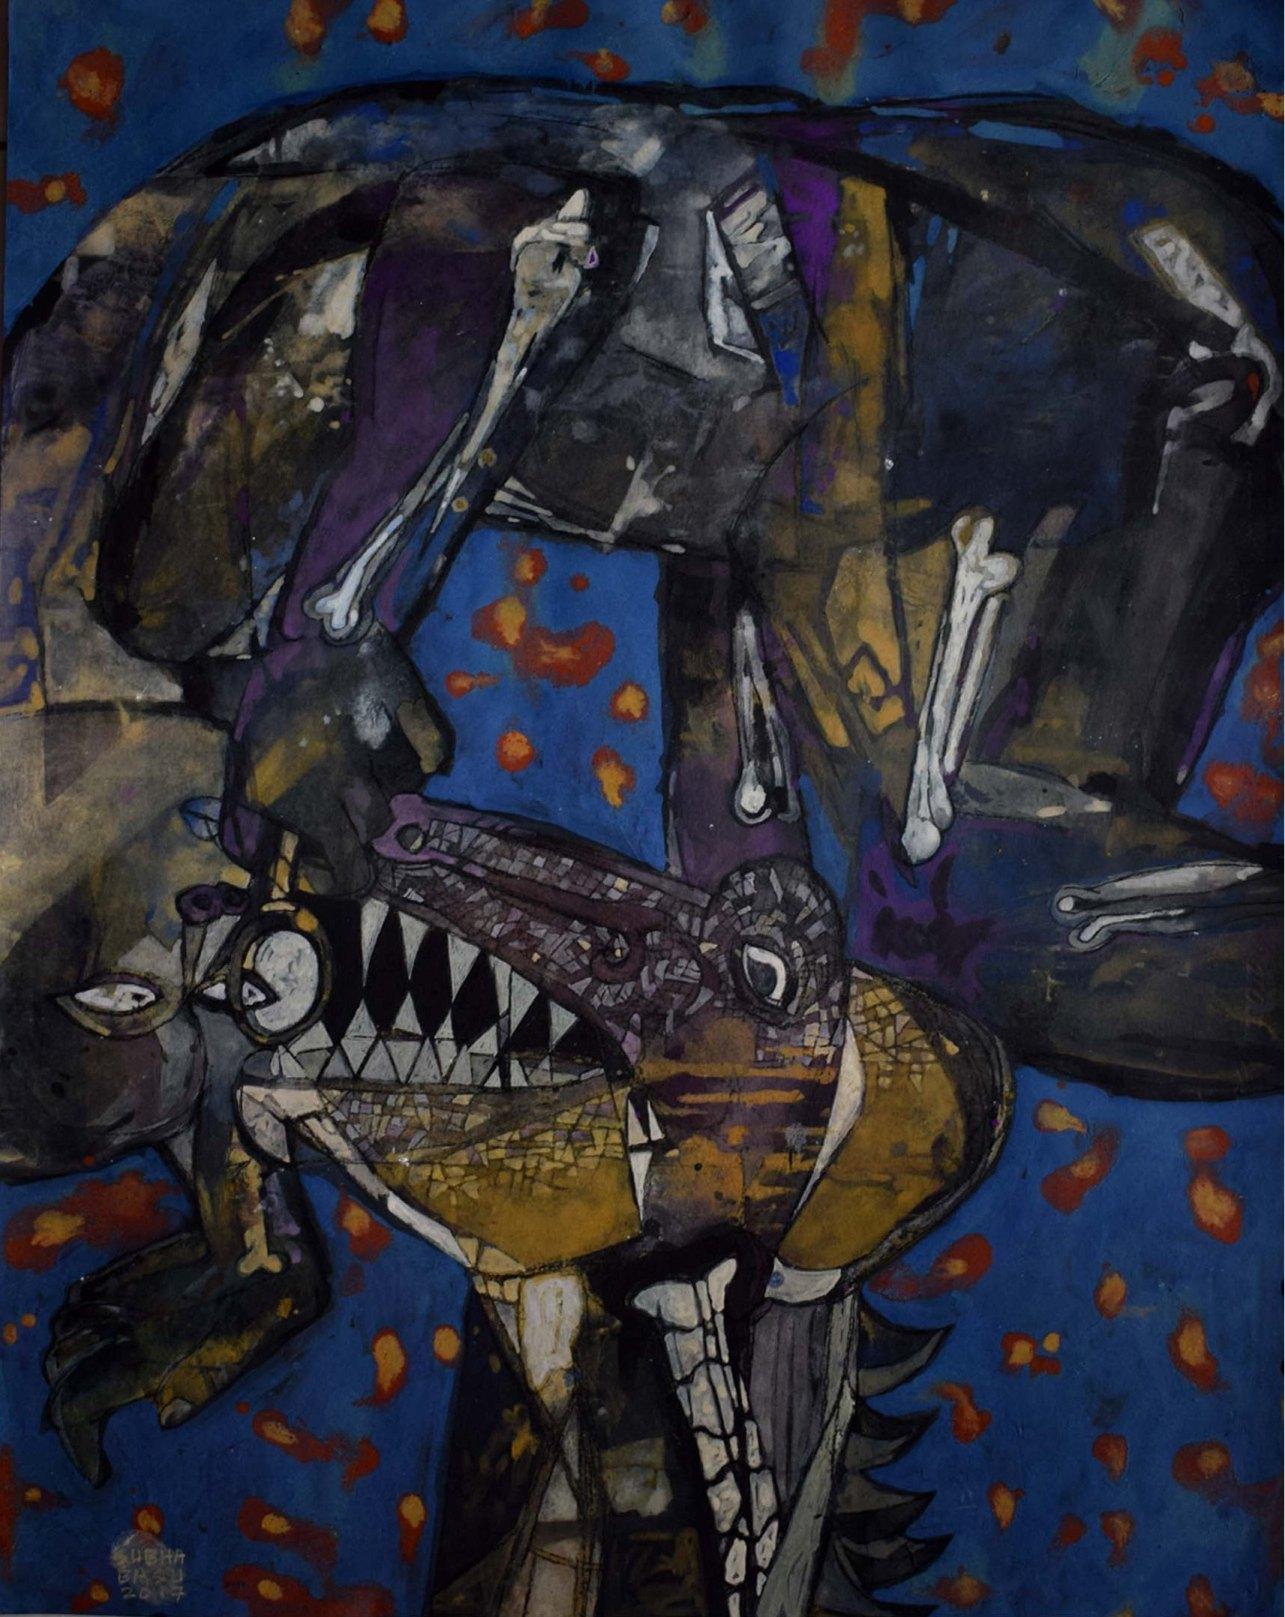 Subha Basu Animal Painting - Prehistoric, Tempera on Paper, Blue, Black by Contemporary Artist "In Stock"